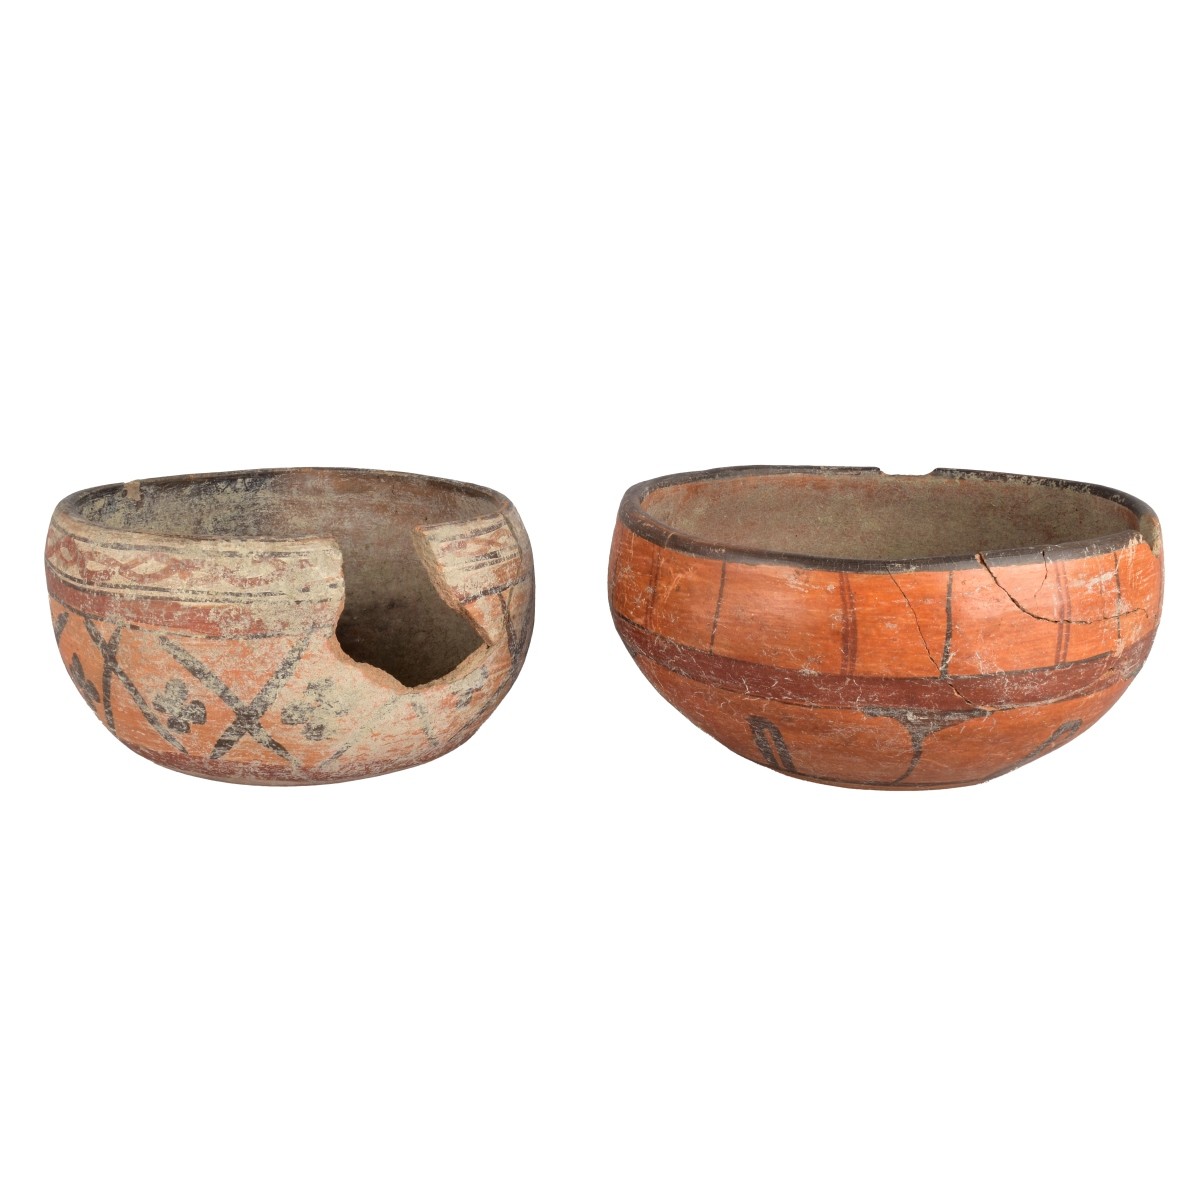 Two Pre Columbian Bowls